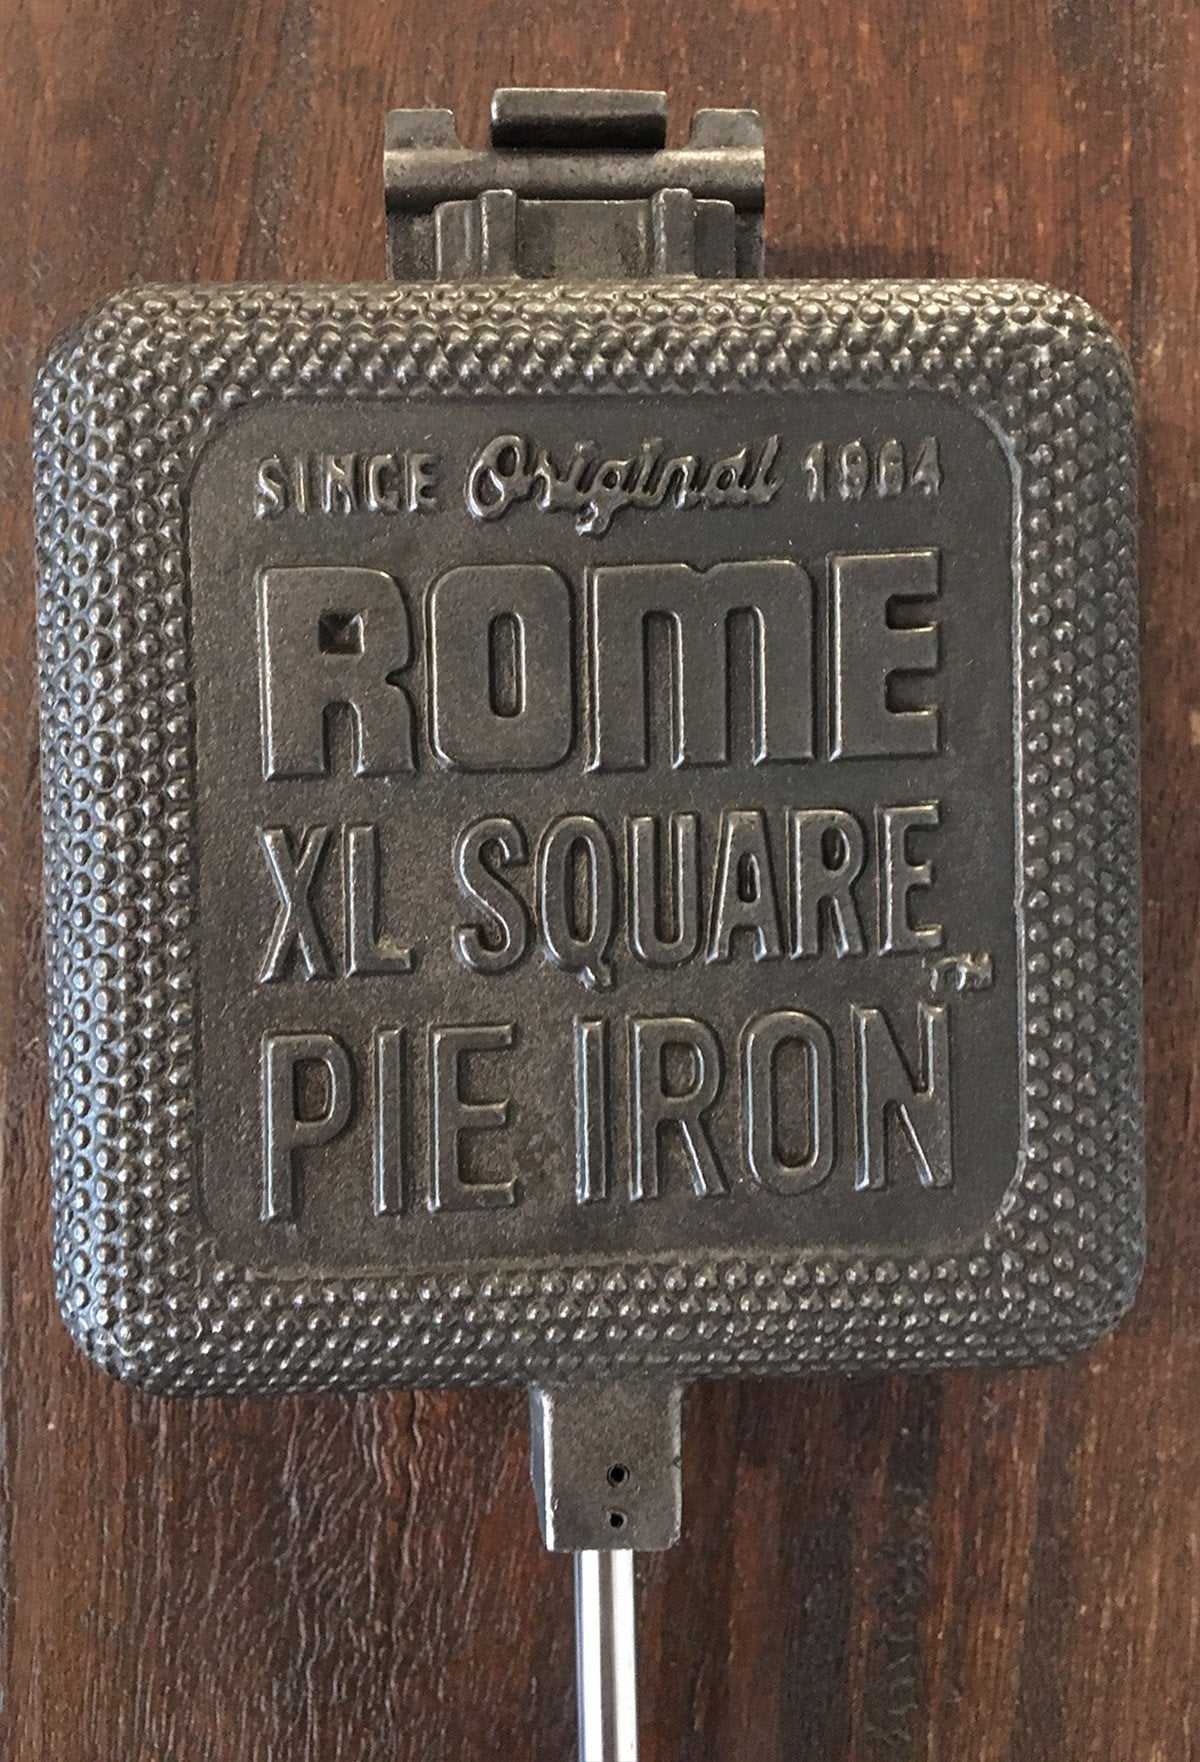 XL Square Pie Iron - Cast Iron, Rome Industries #1760